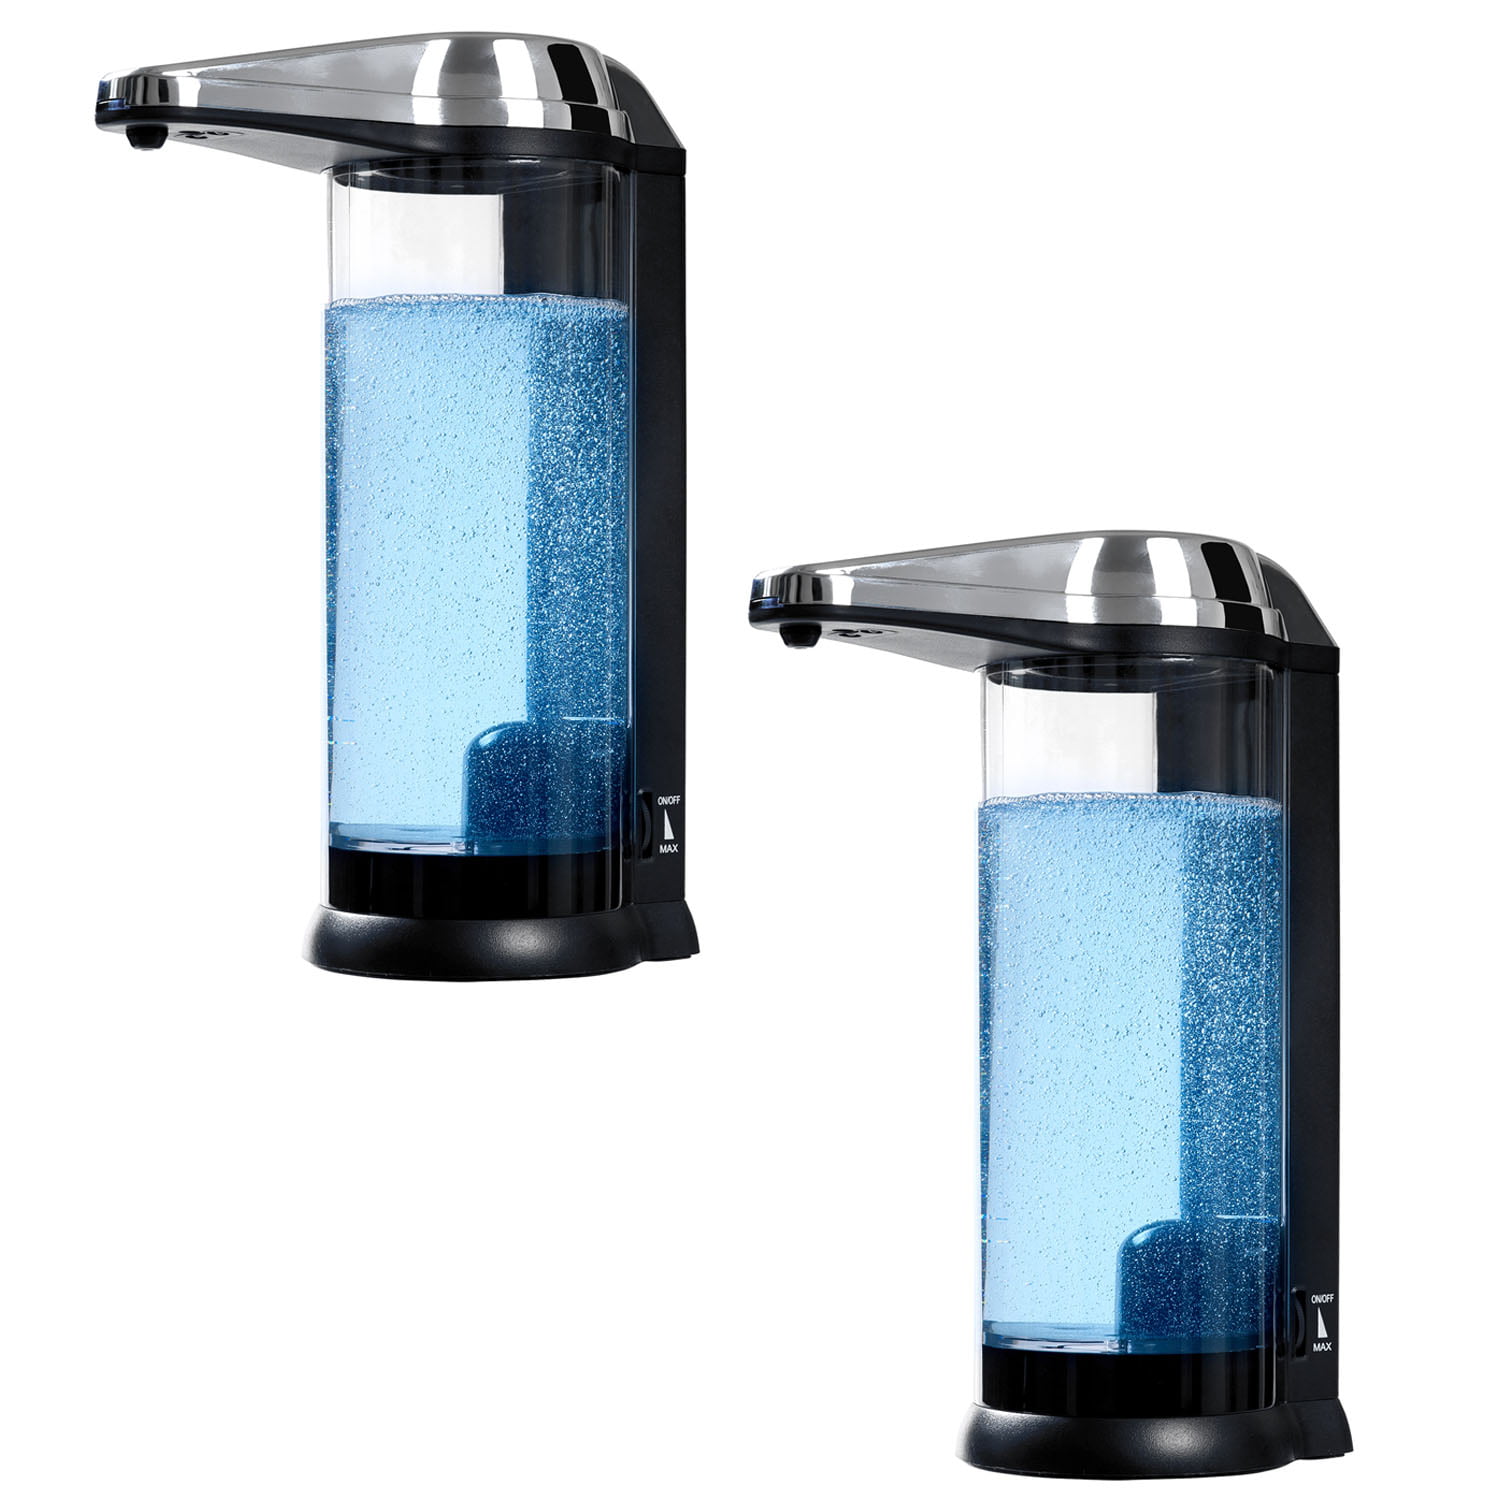 Urban Den Automatic Hands-Free Soap Dispenser | Hands-Free Soap